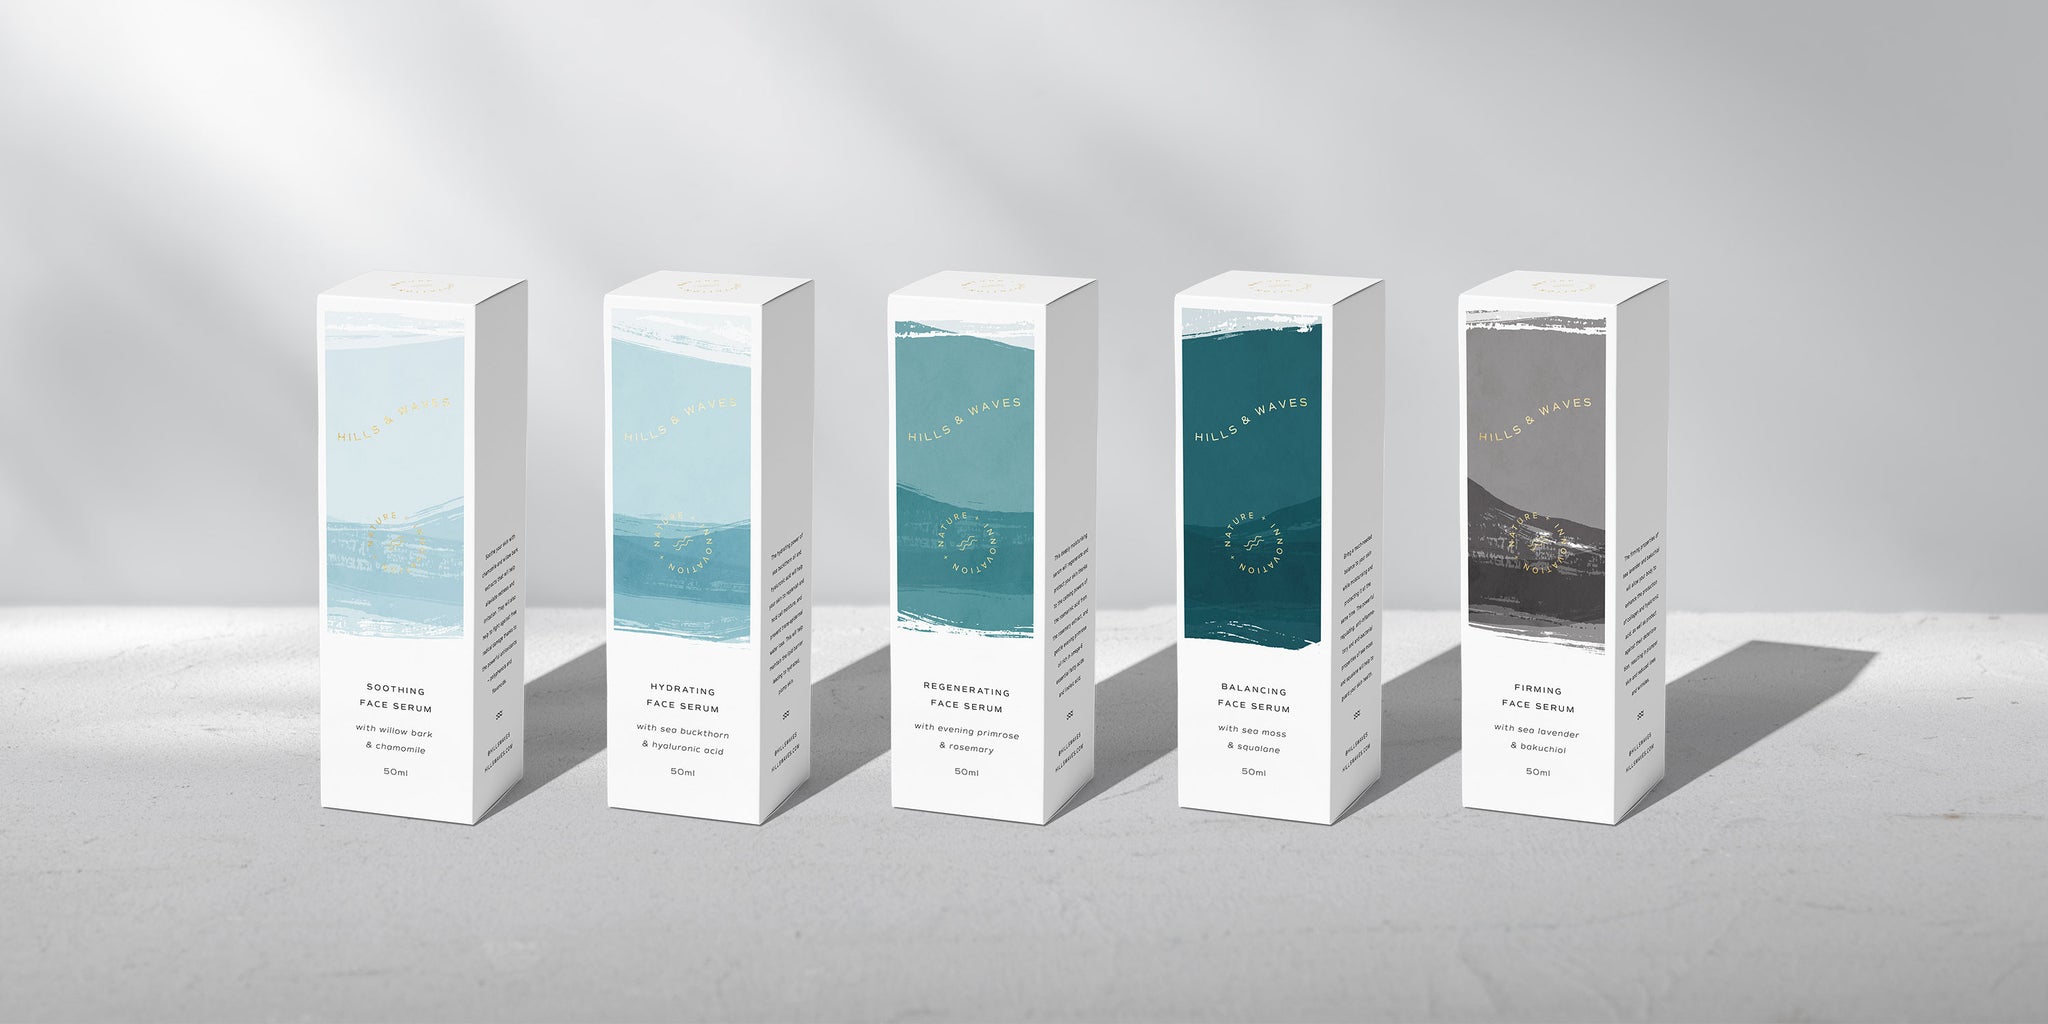 Karolina Król Studio Hills & Waves minimalist brand identity for sea moss face serum